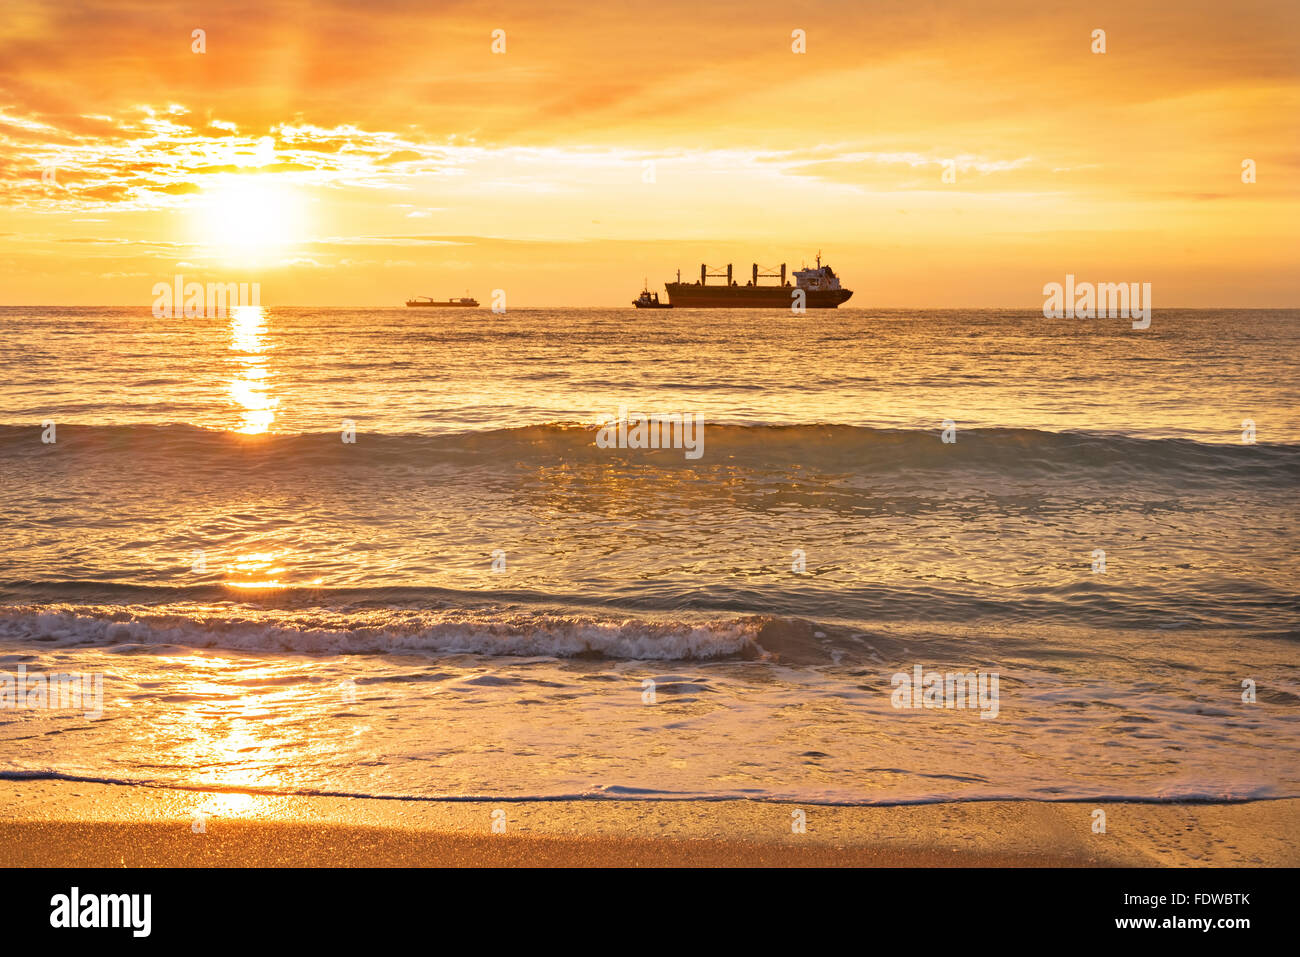 Schiff, Meer, Sonnenuntergang. Stockfoto